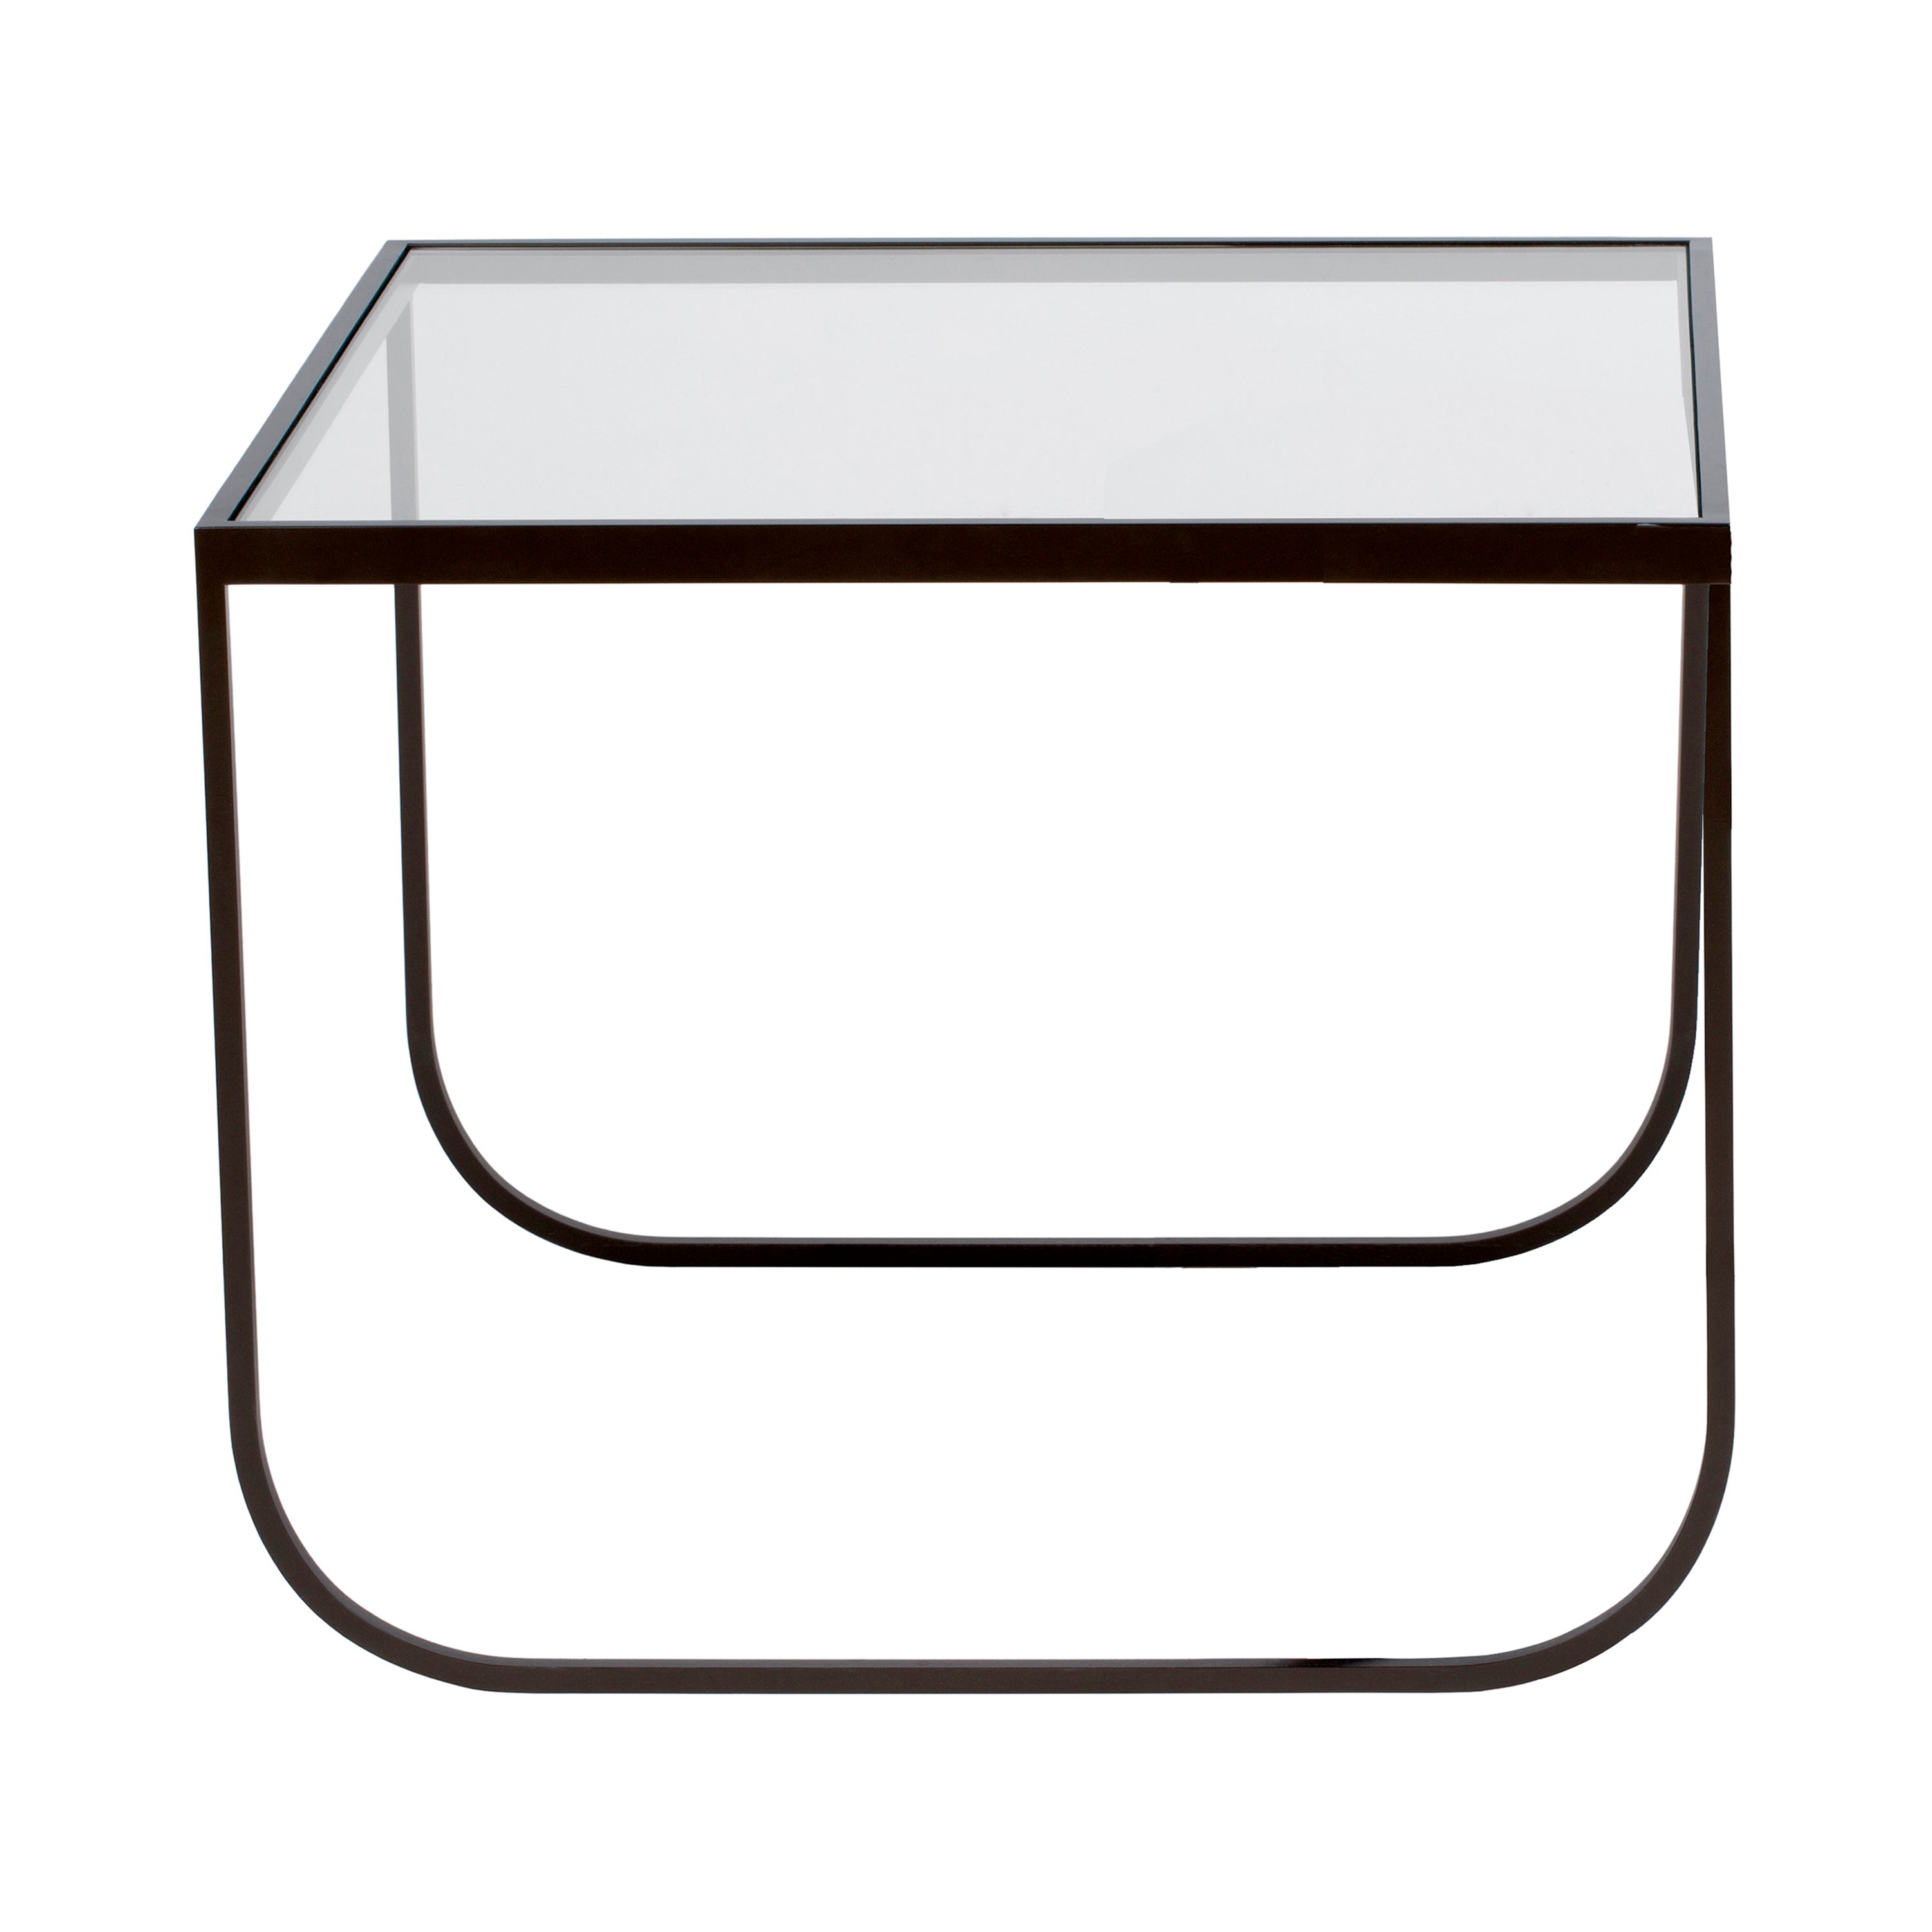 Tati Coffee Table: Square + Glass Top + High + Transparent Glass + Char Grey